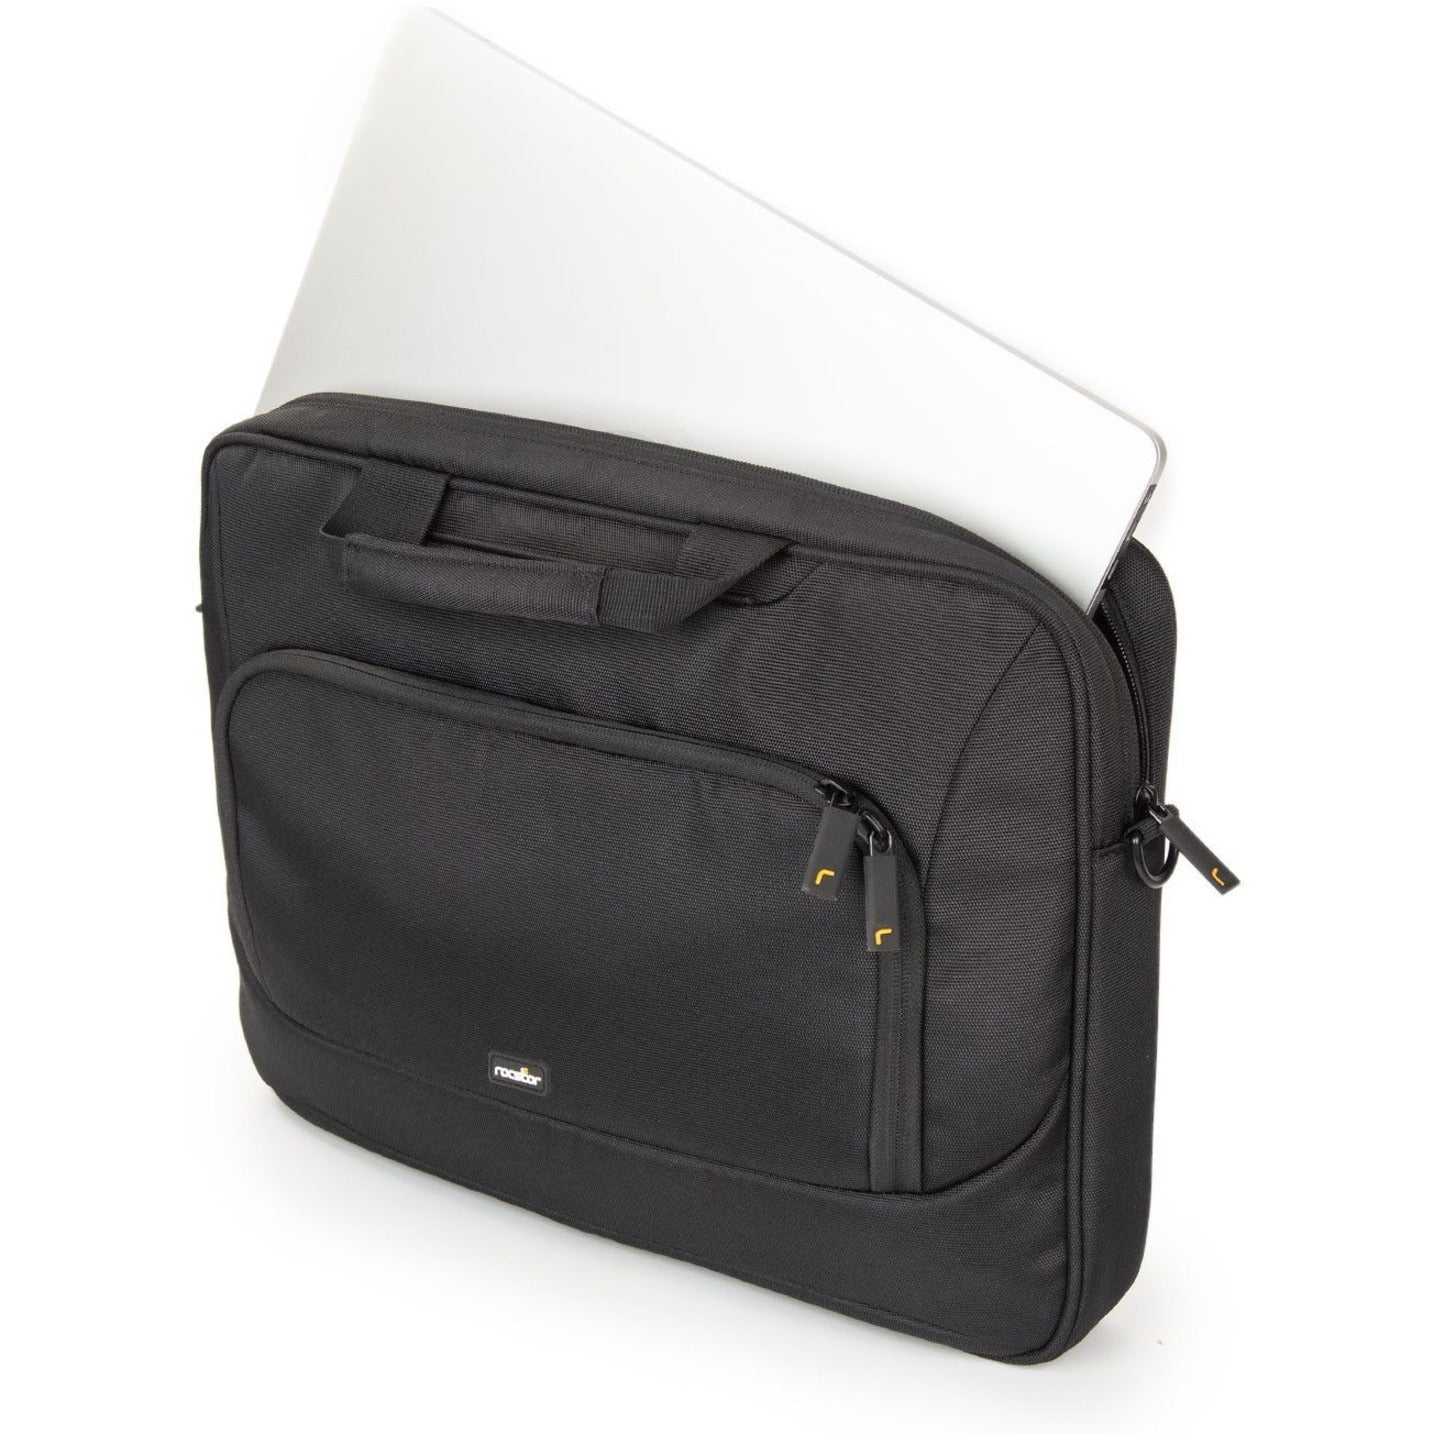 Rocstor Y1CC001-B1 Premium Universal Laptop Carrying Case Toploading, Fits up to 14.1" Laptop, RFID Pocket